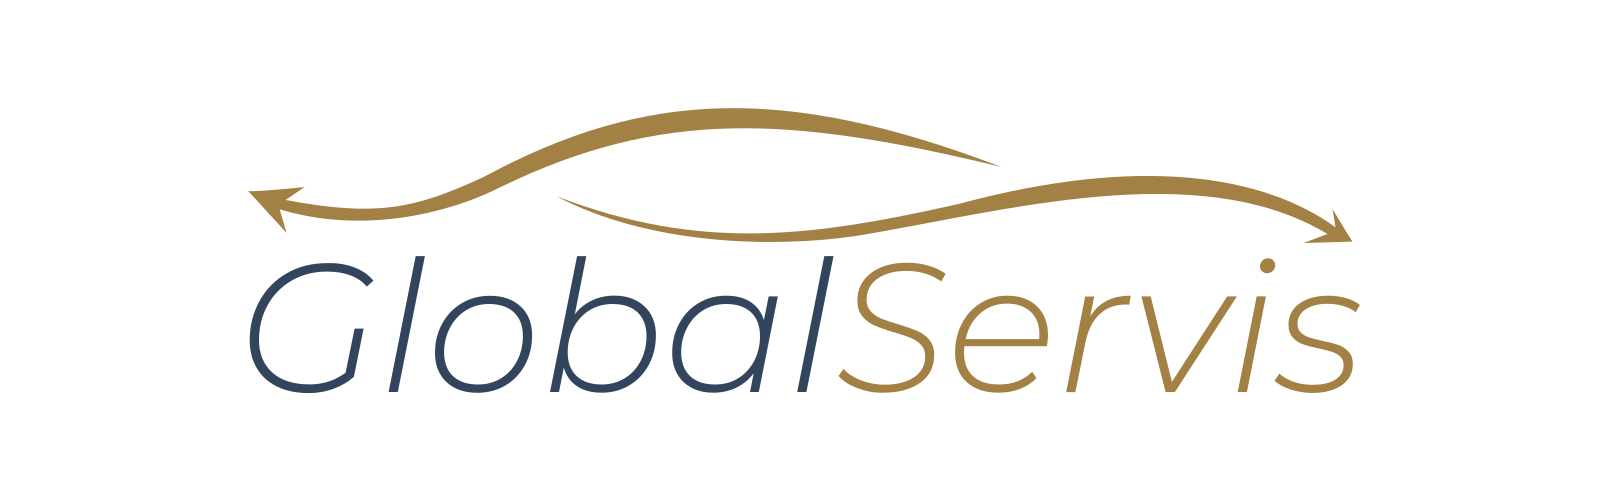 Global Servis